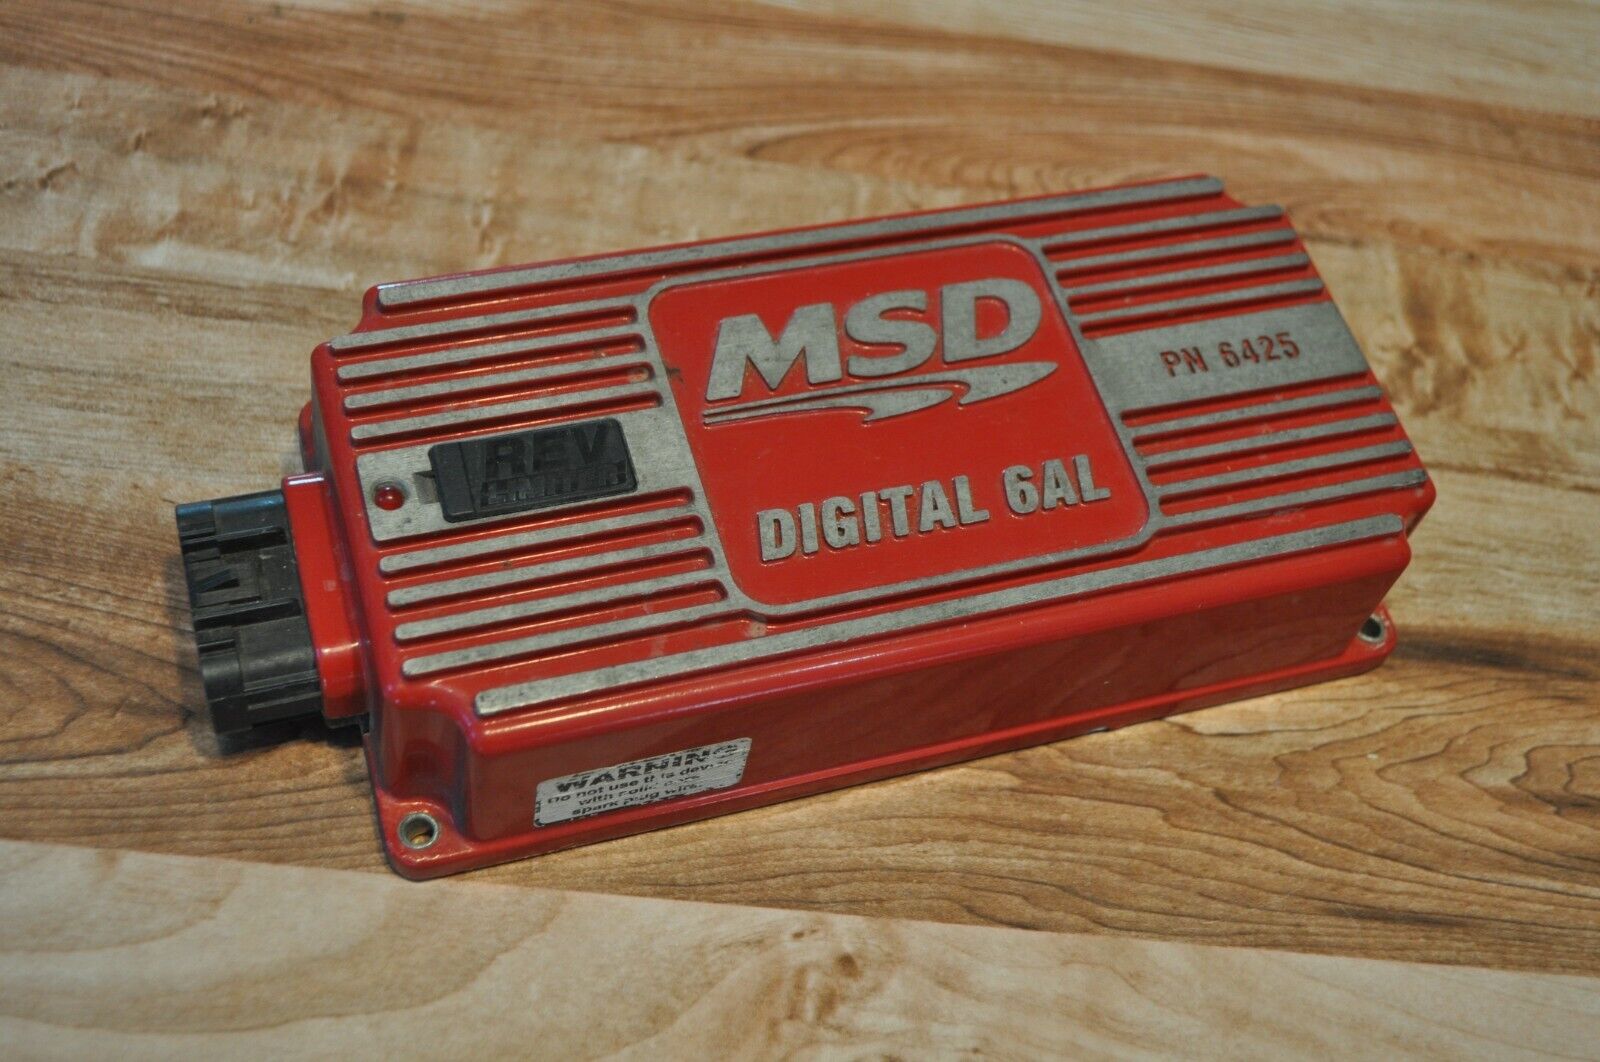 MSD 6425 Digital 6AL Ignition Box RPM Rev Limiter hot rod dragster drag boat